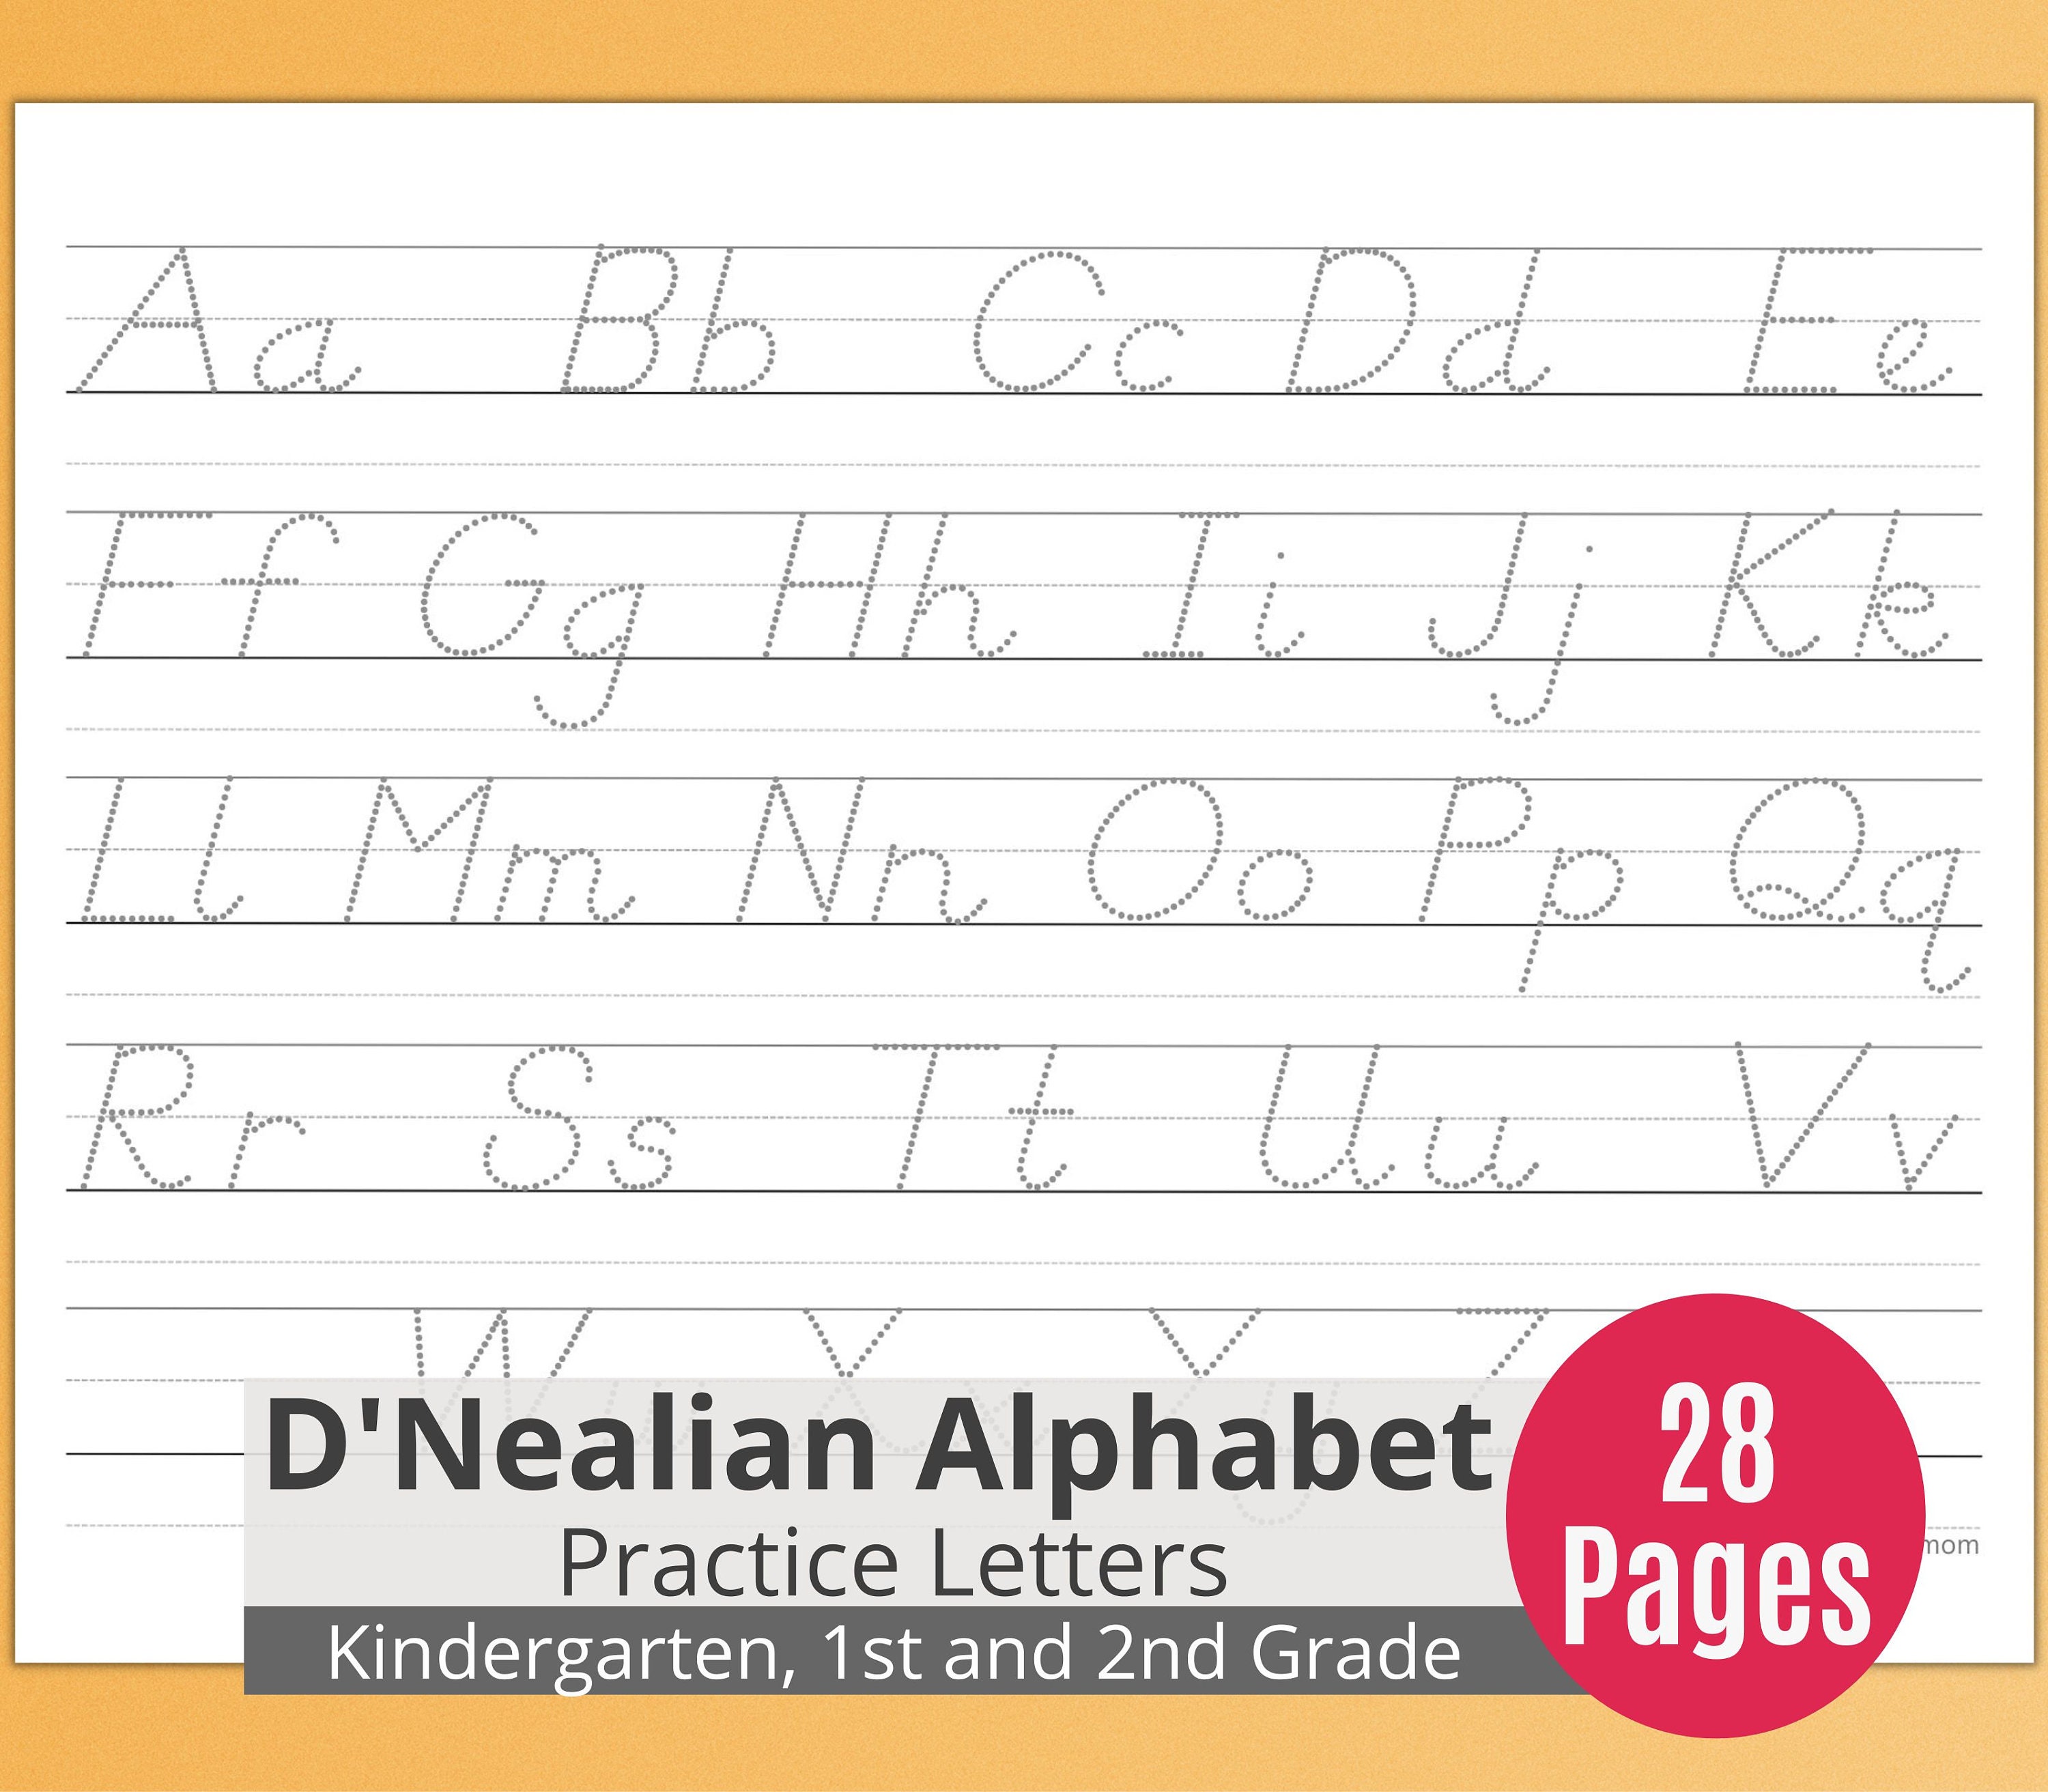 D'Nealian Handwriting Cursive ABC Book: Handwriting Practice Book [Book]